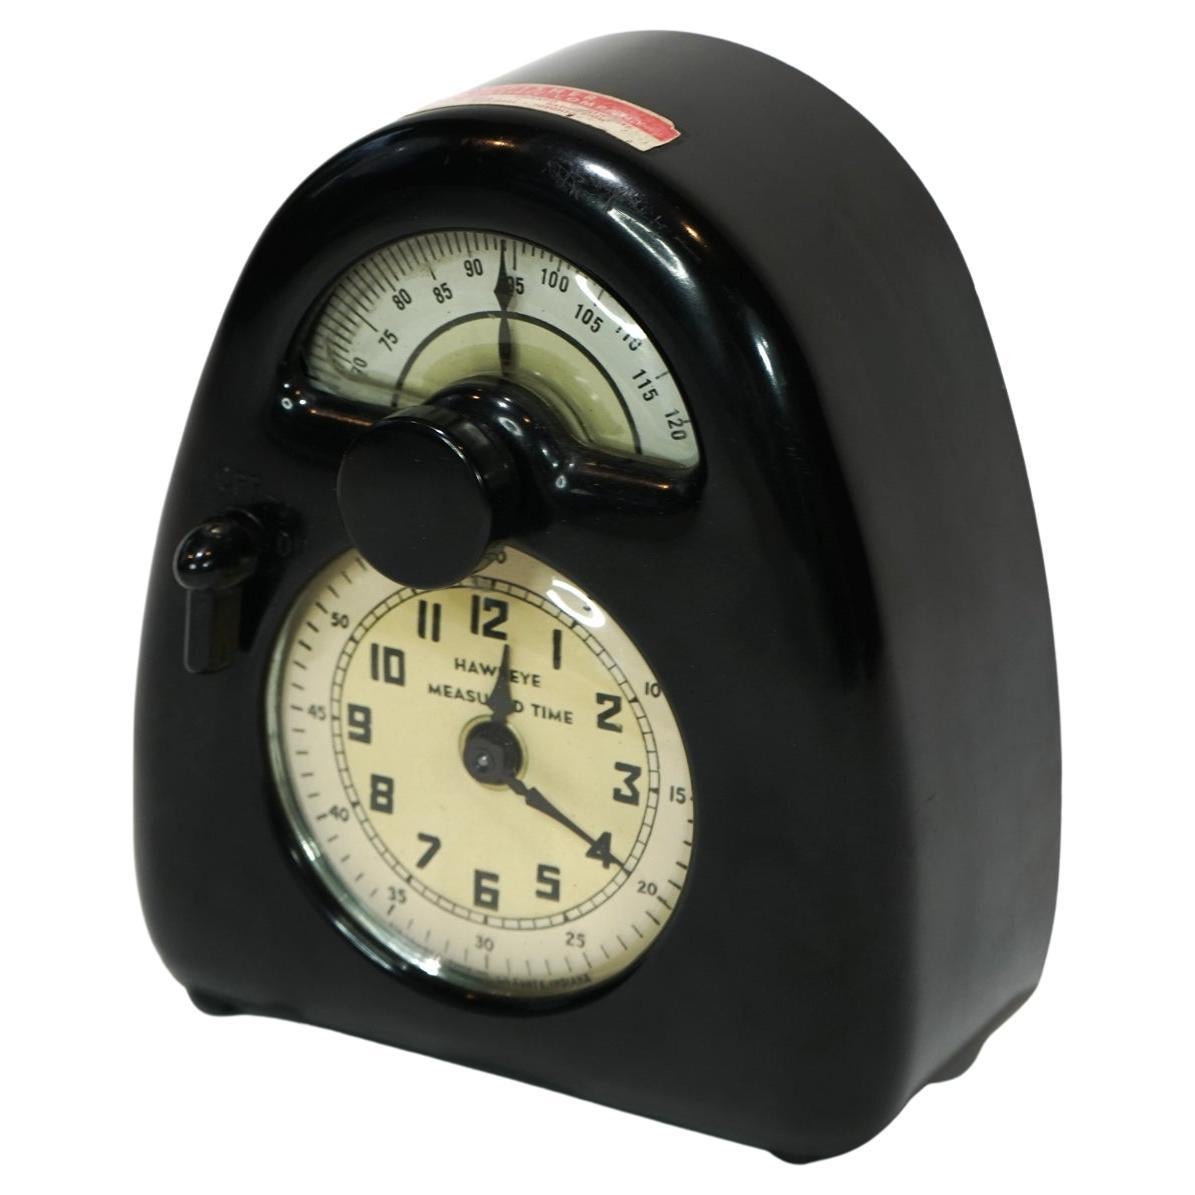 Isamu Noguchi Designed Stevenson Hawkeye Measured Time Clock